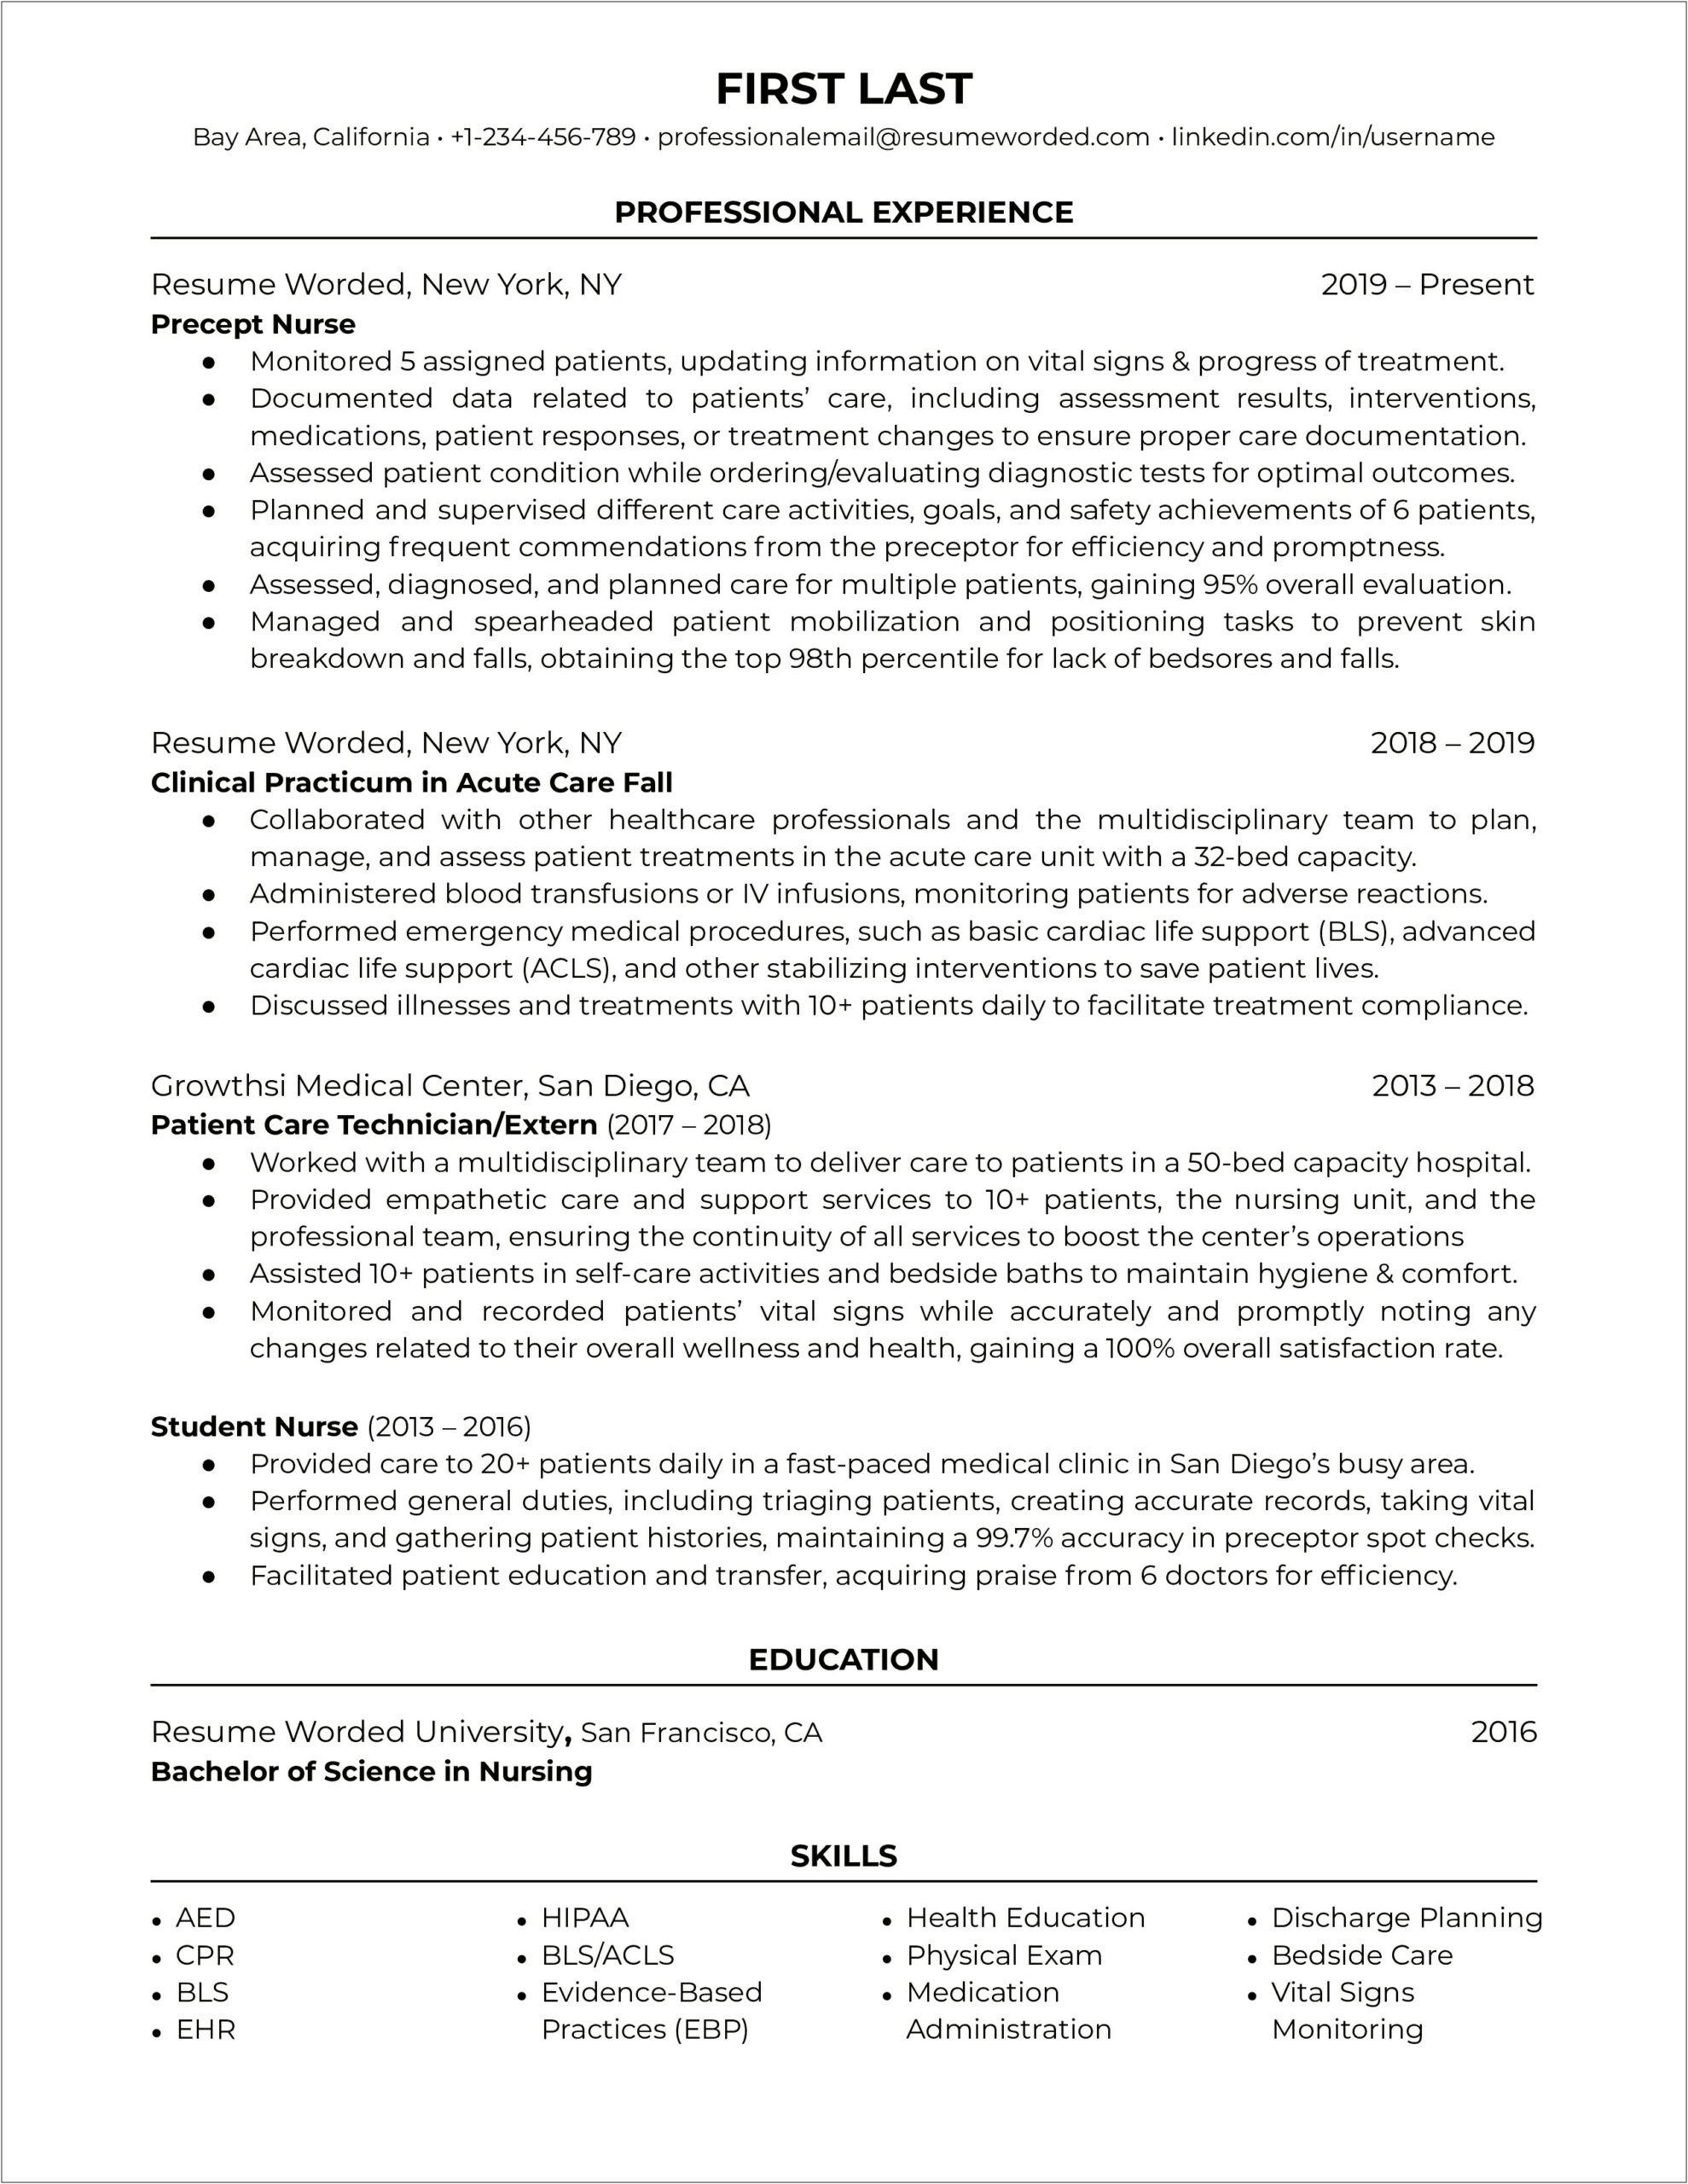 Recent Nursing Graduate Summary For Resume